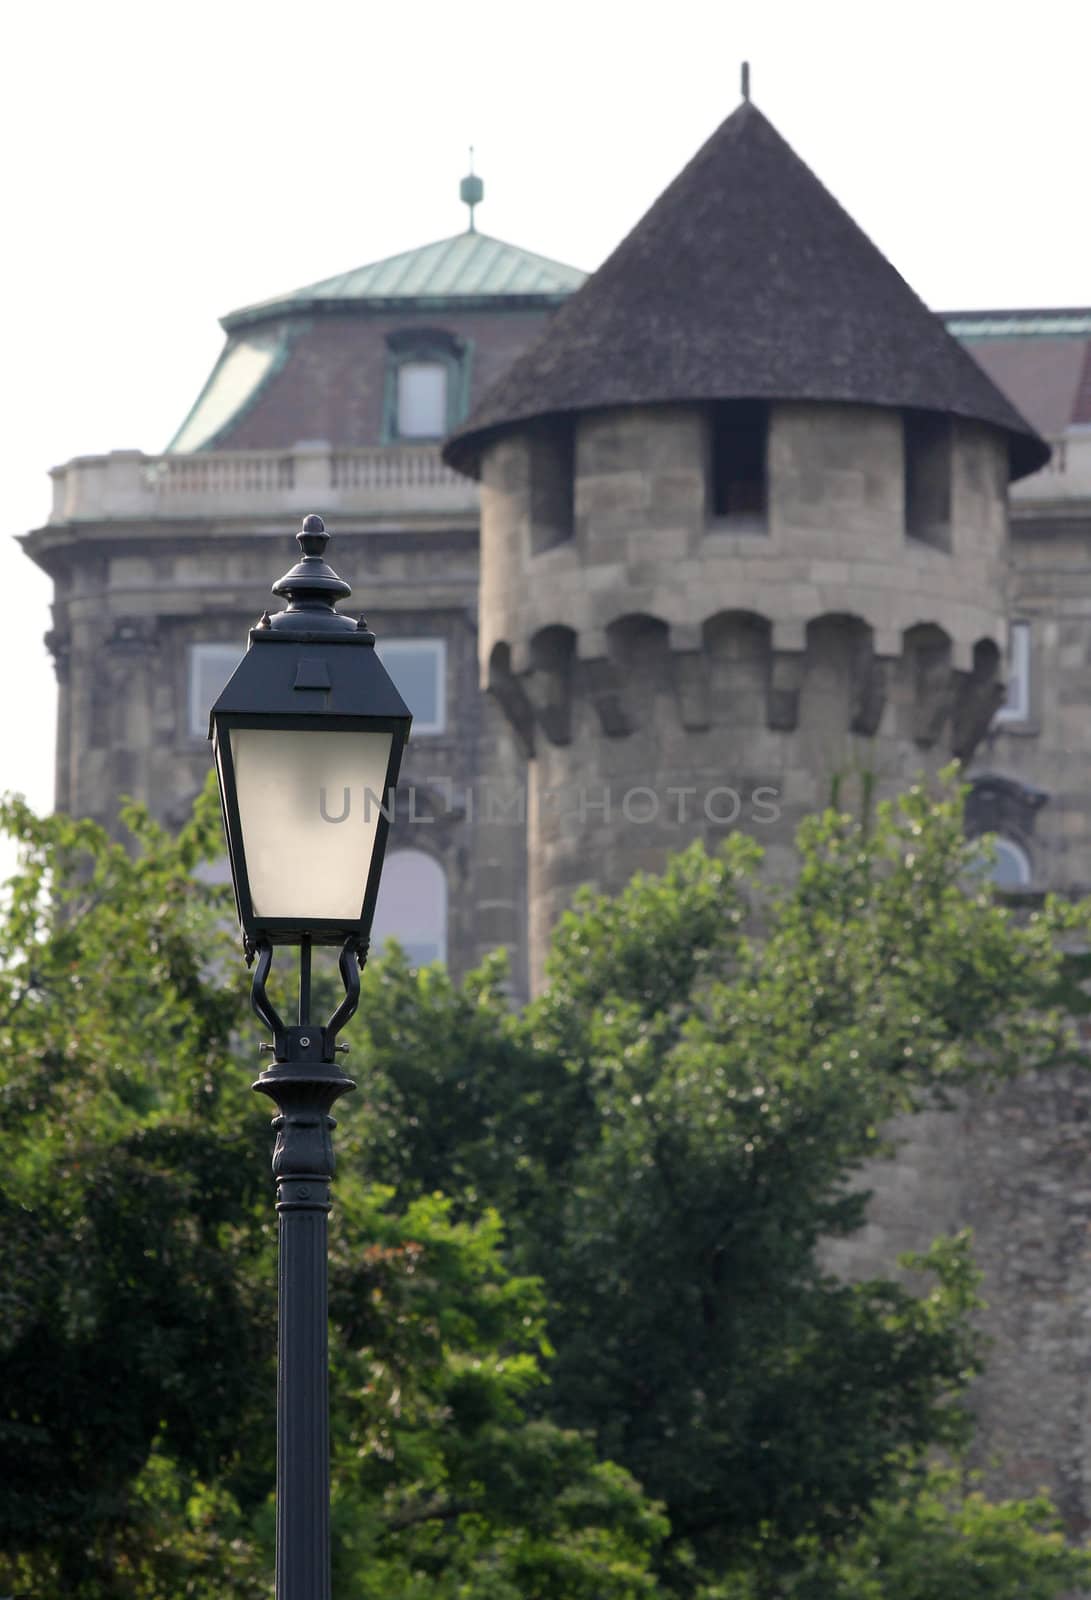 castle lamp by gallofoto